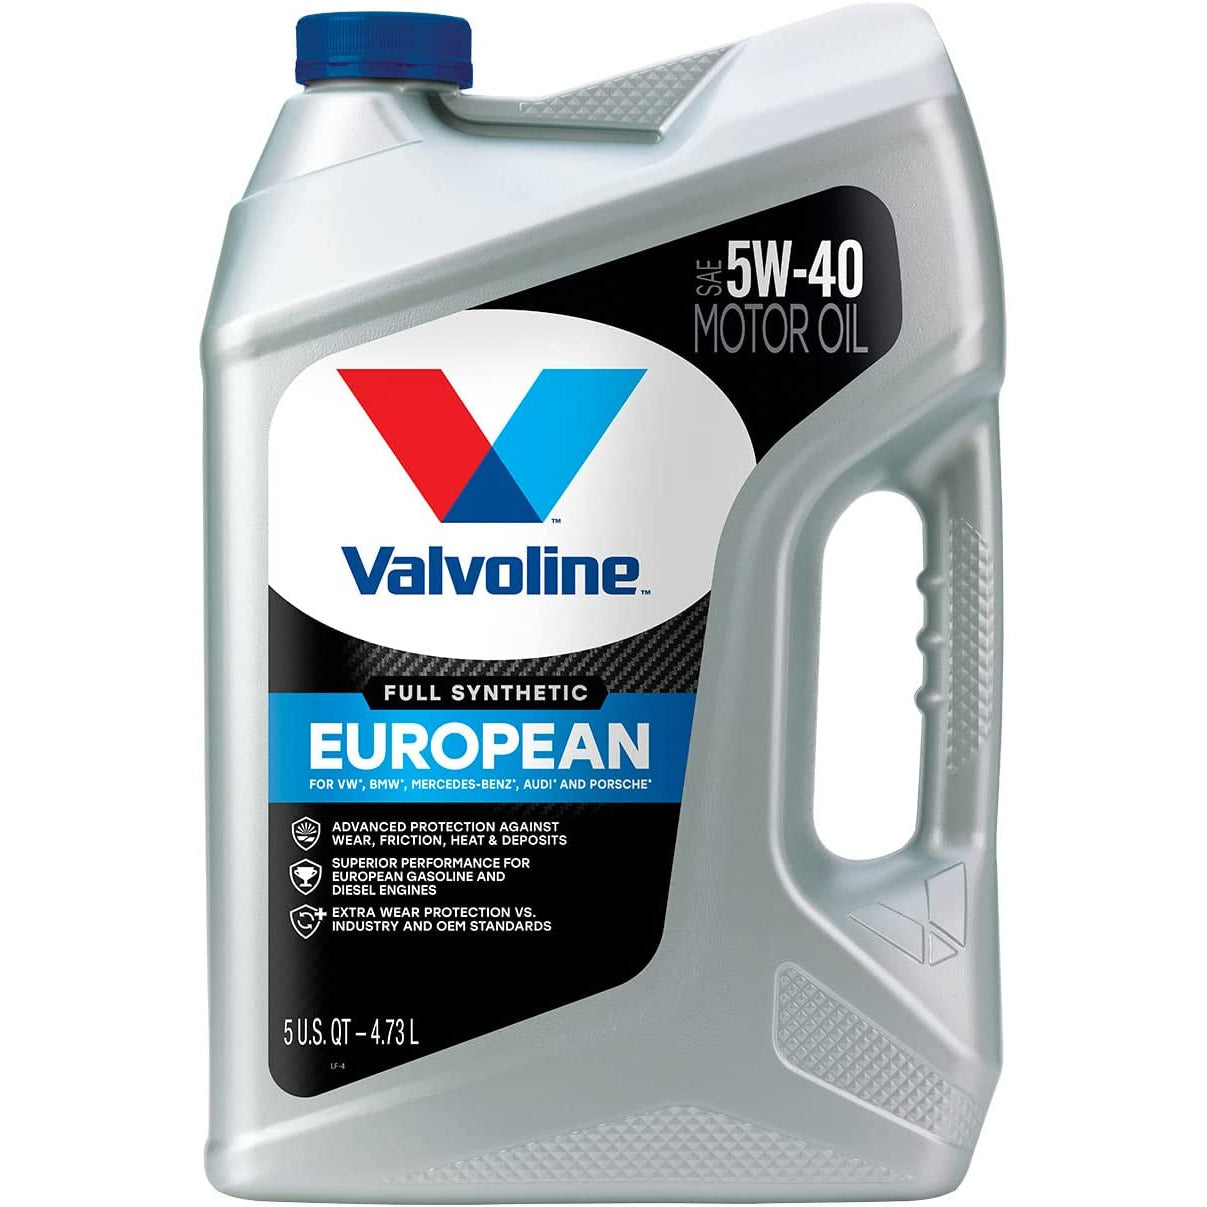 VAL 881166 | EUROPEAN VEHICLE FULL SYNTHETIC 5W-40 MOTOR OIL : 5 QT